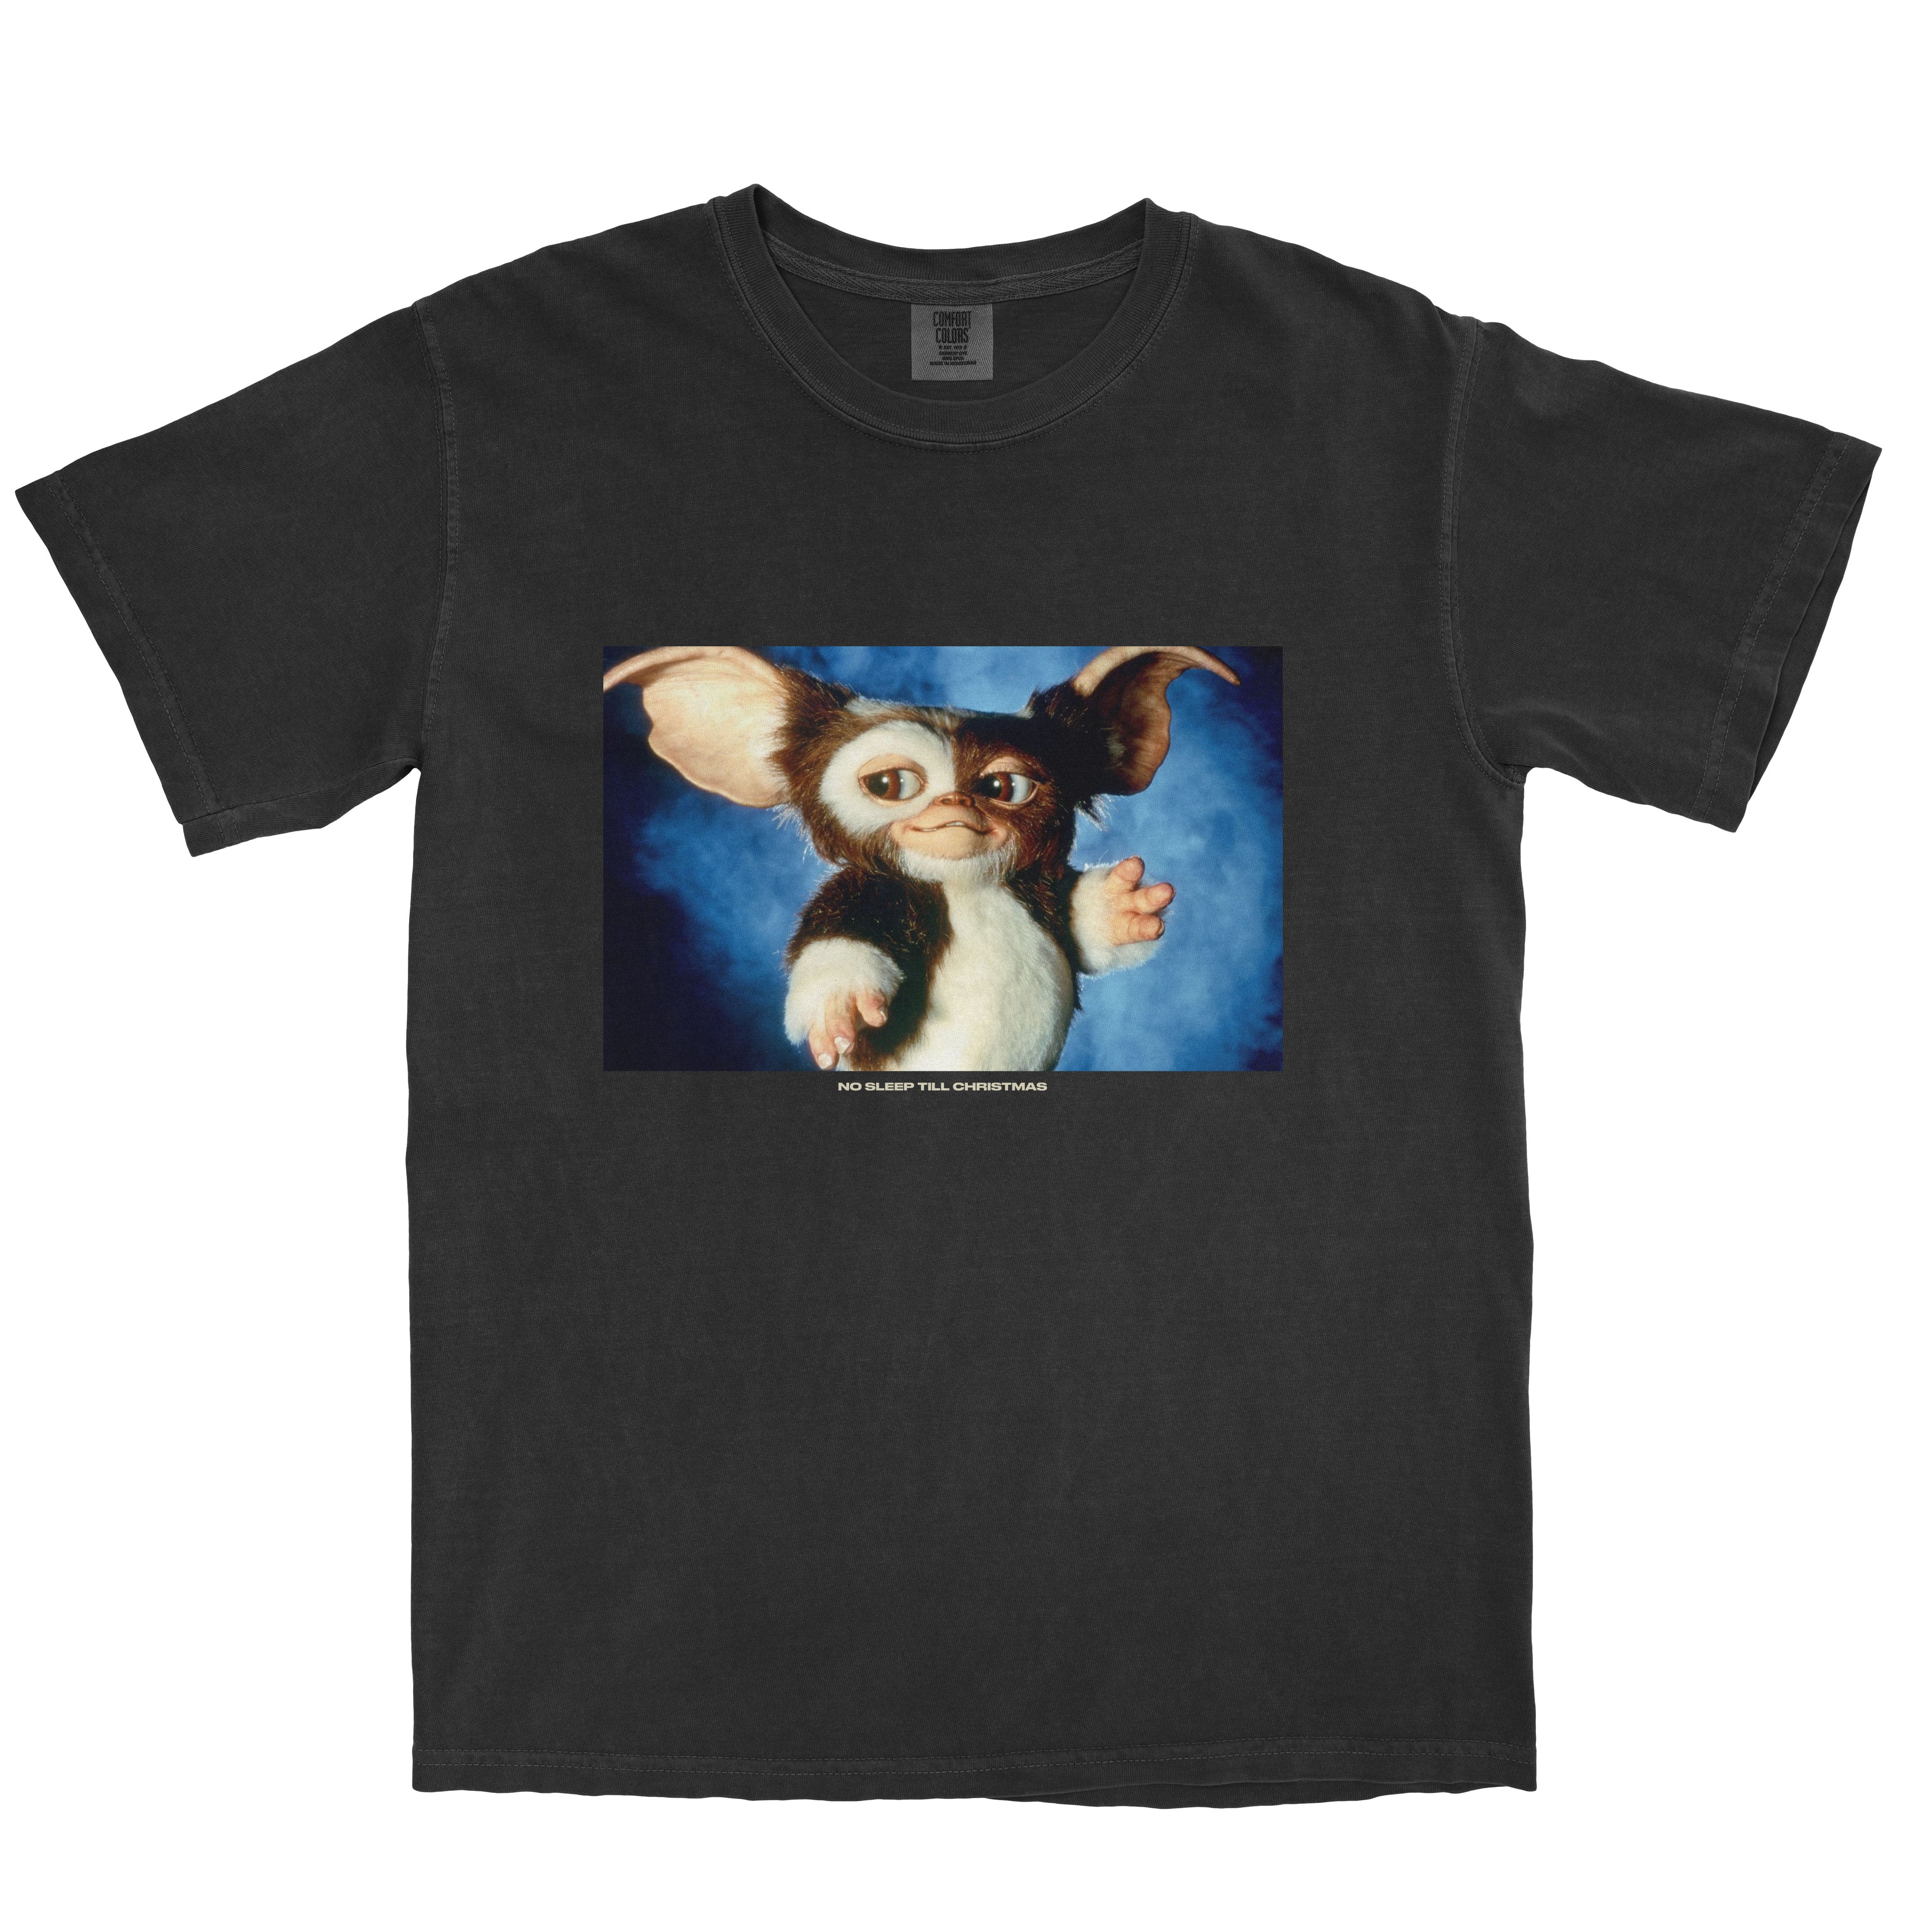 Gremlins Shirt